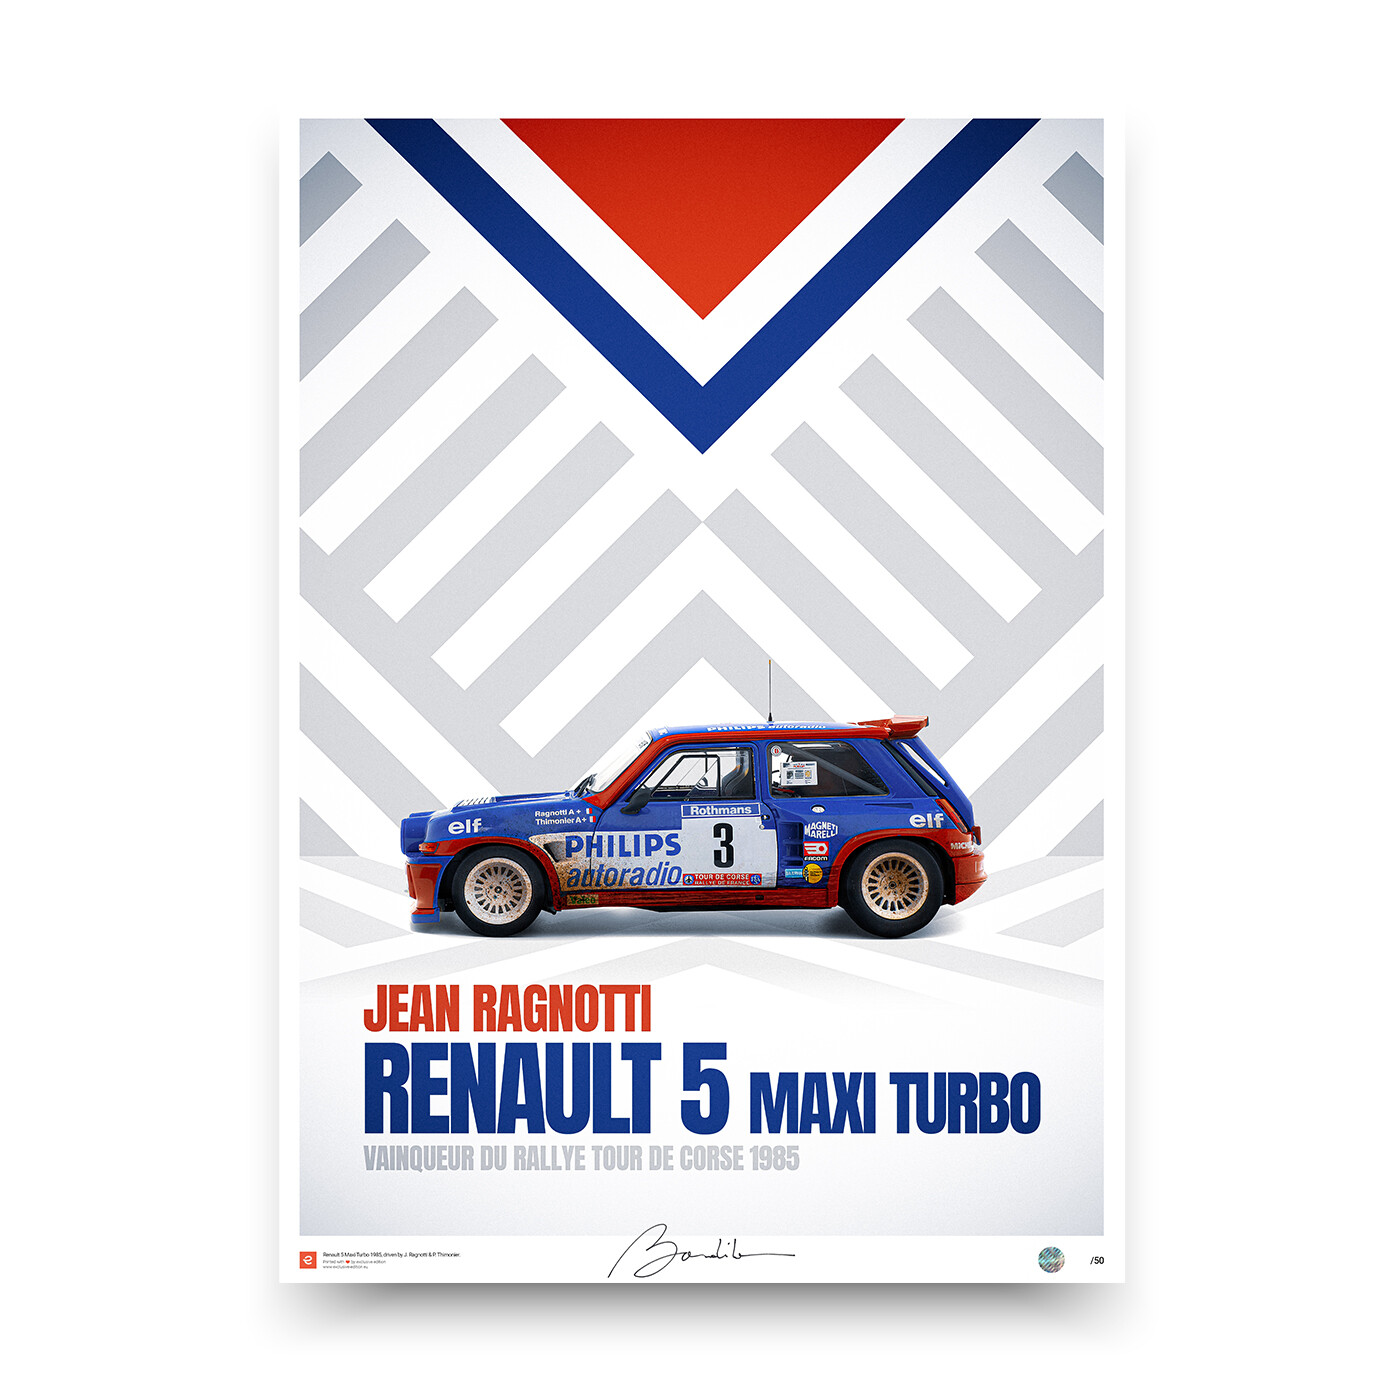 Renault 5 maxi Turbo - Ragnotti - Rallye Tour de corse 1985. Limited edition